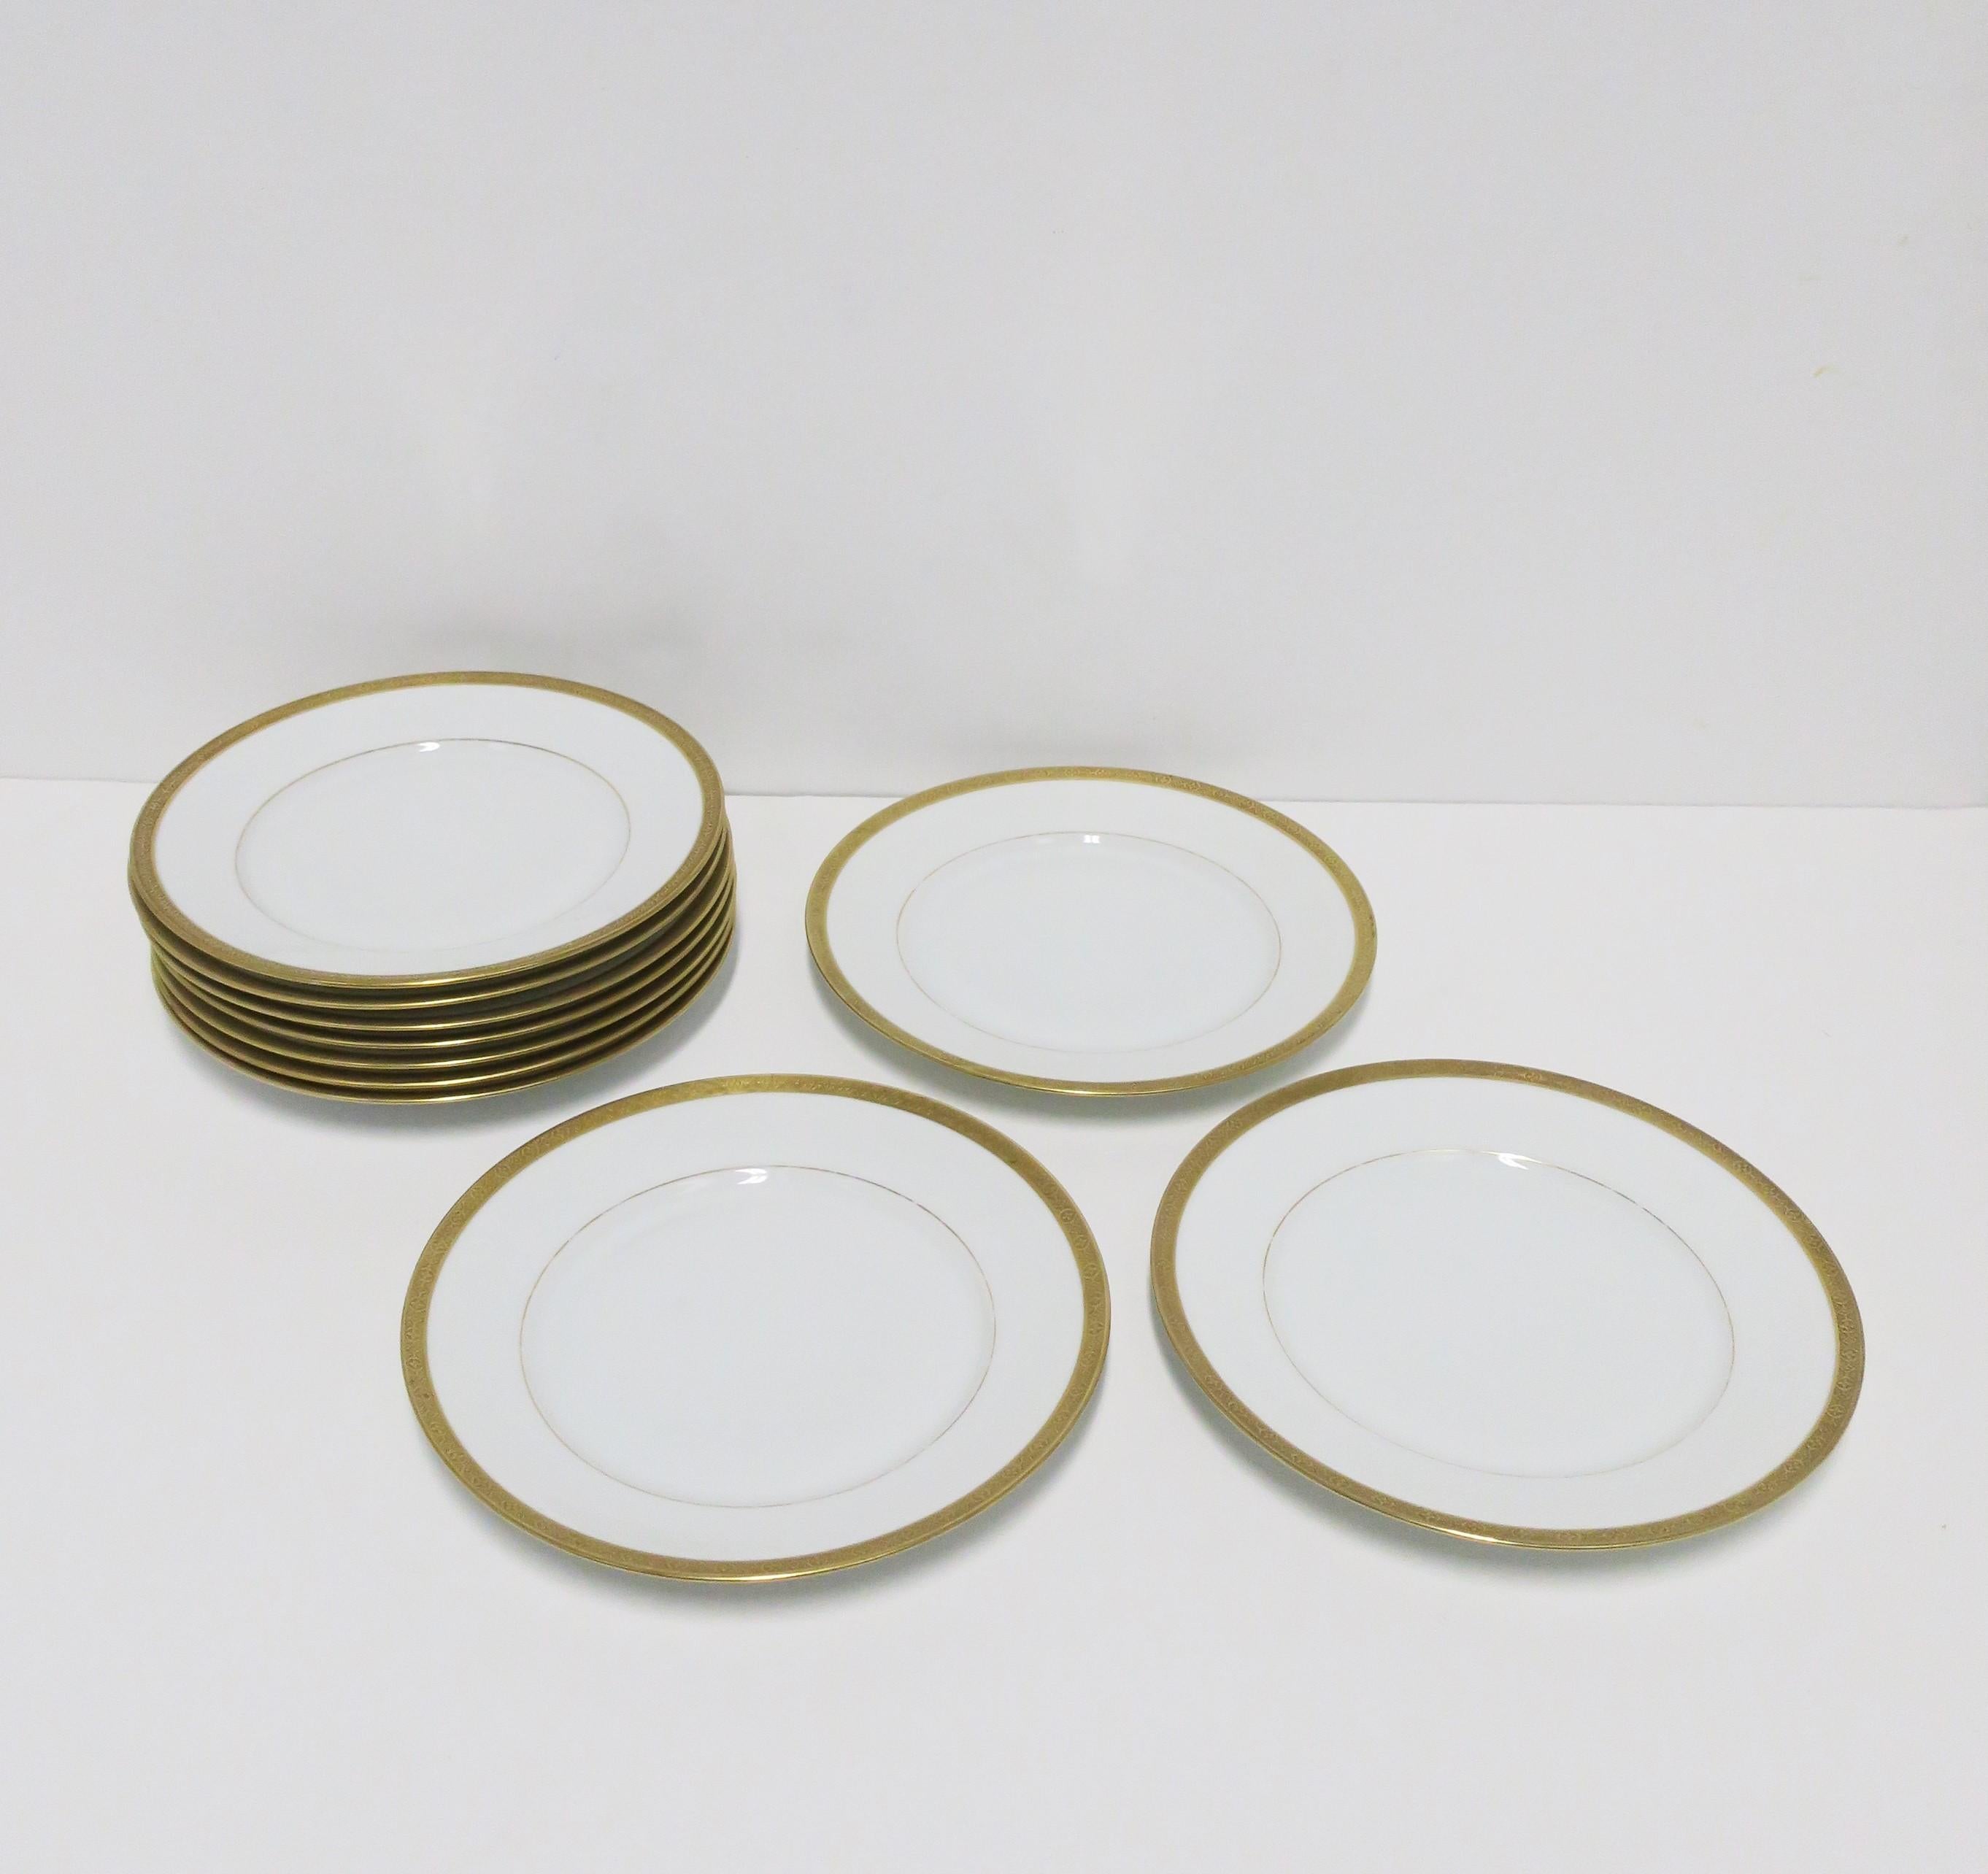 Glazed Austrian White Porcelain Plates with Gold Edge, Set of 10